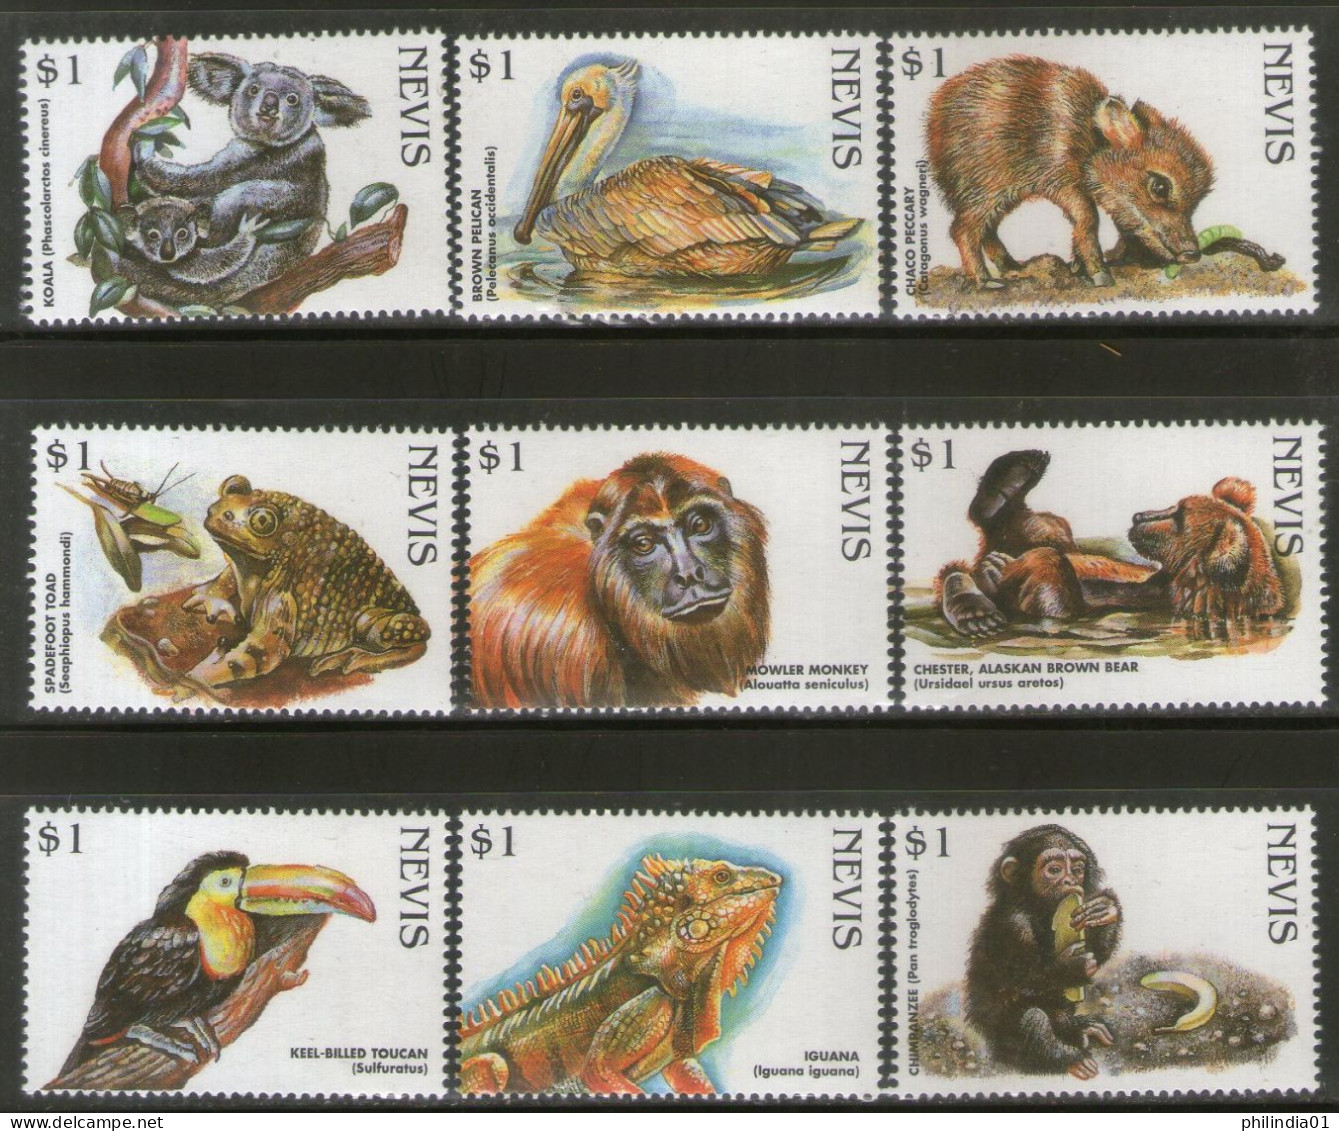 Nevis 1998 Endangered Species Birds Monkey Bear Wildlife Animals Sc 1073 9v MNH # 196 - Apen